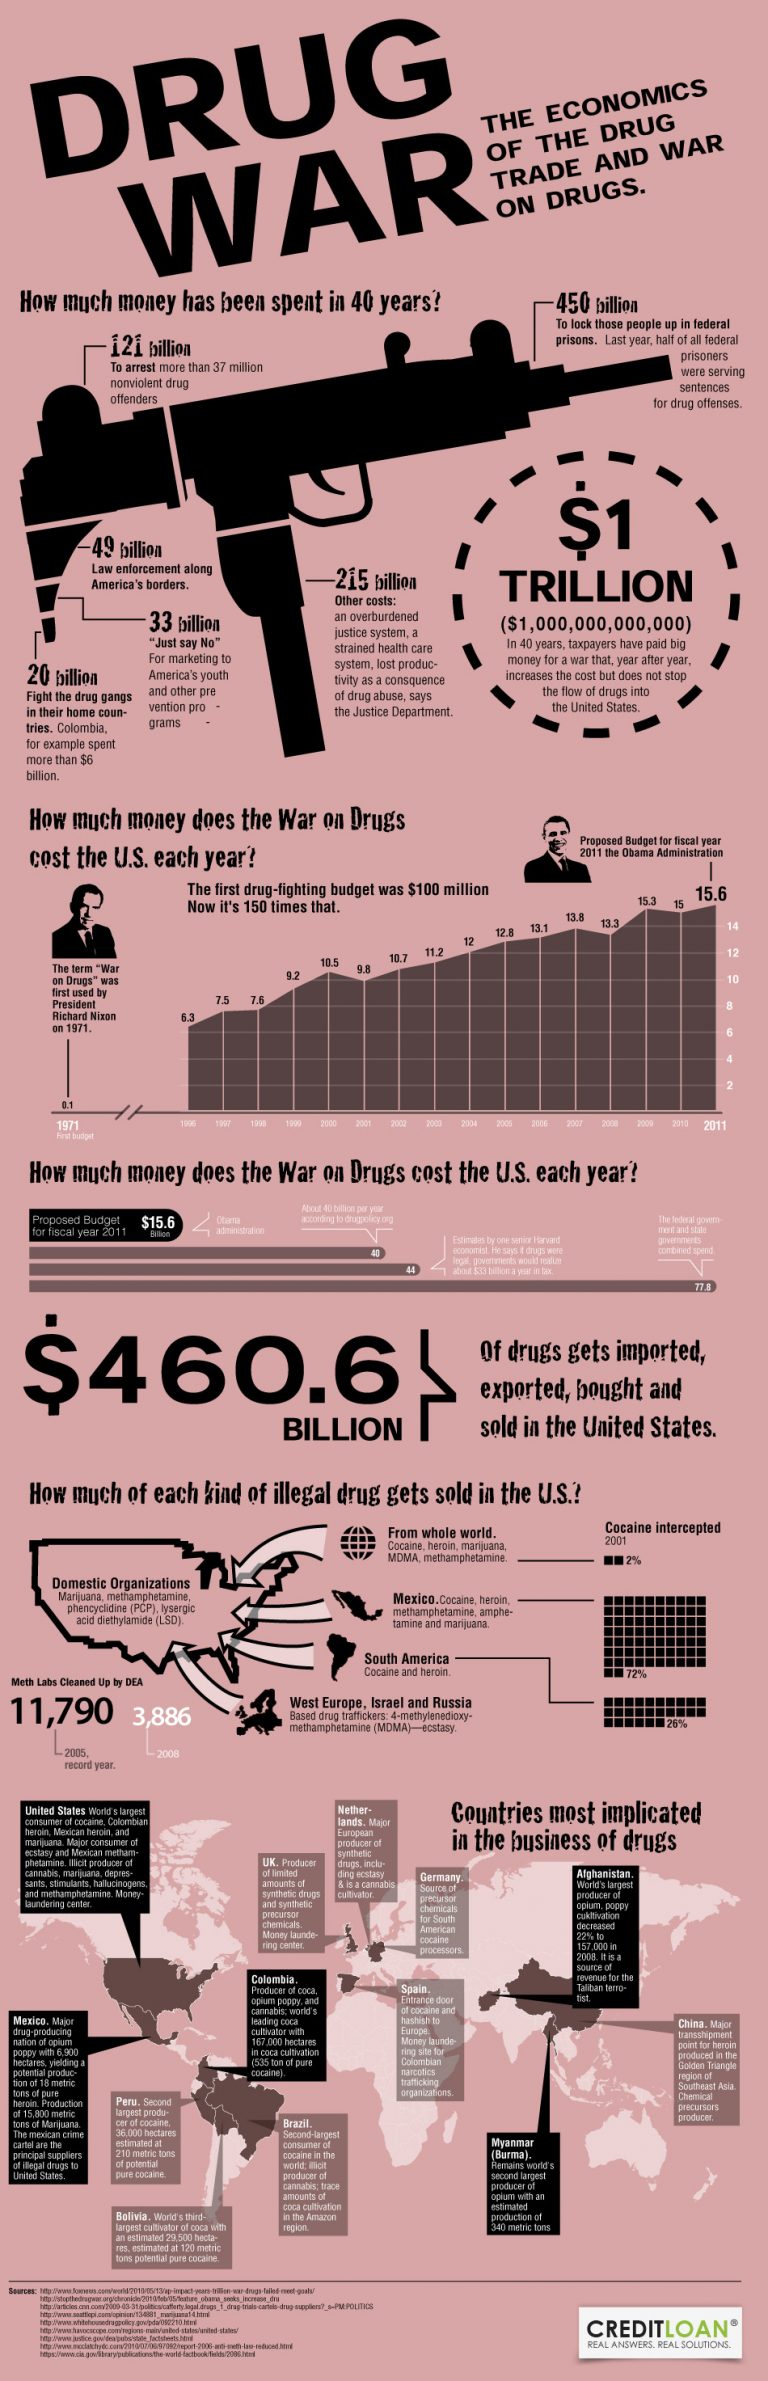 The War on Drugs Seen Through Statistics